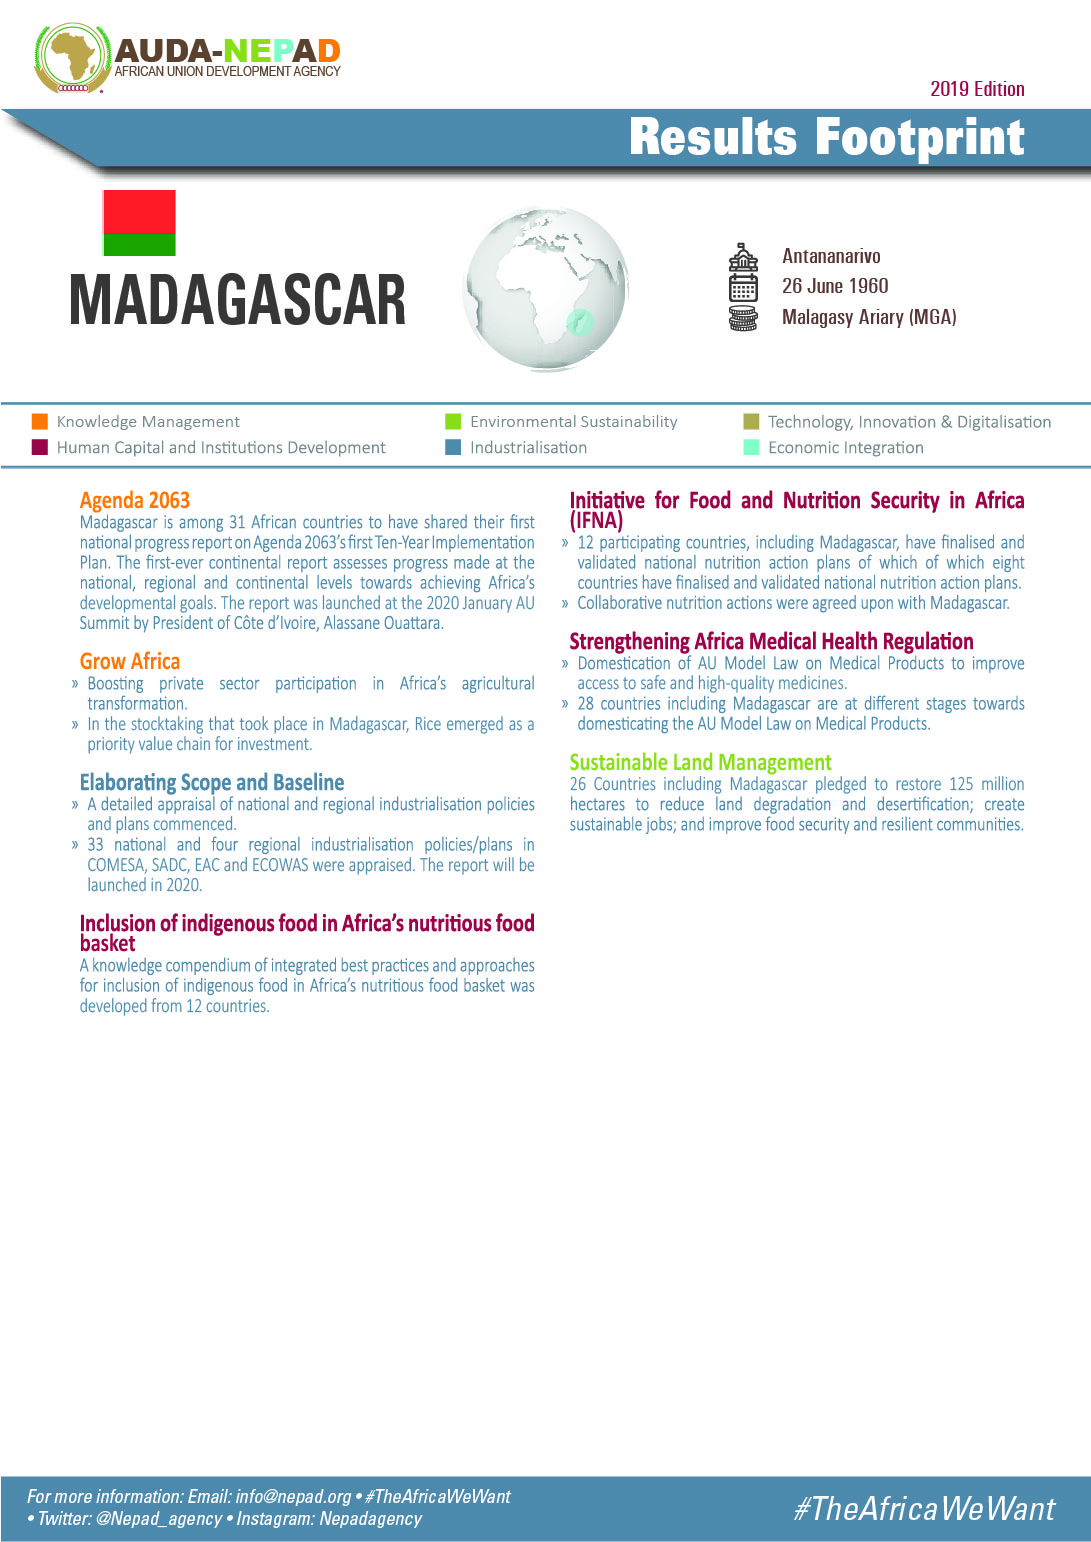 2019 AUDA-NEPAD Footprint: Country Profiles: Madagascar